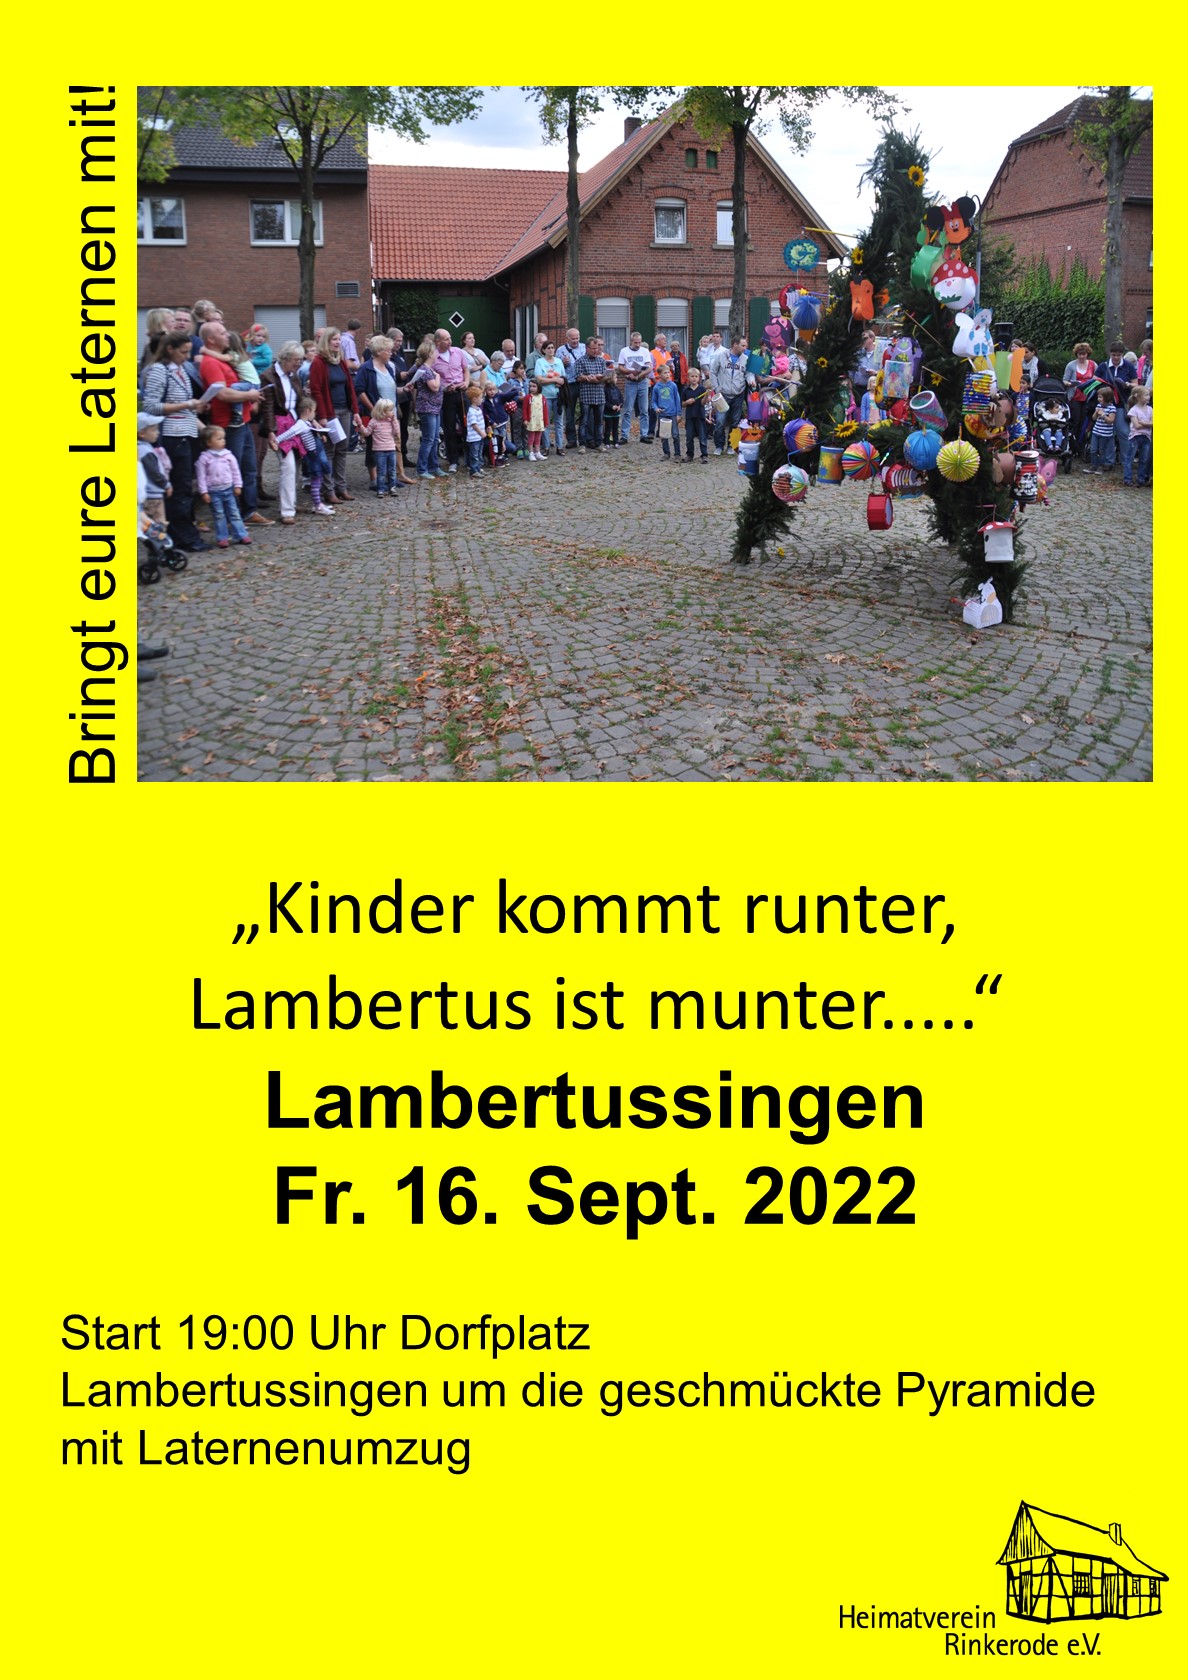 Plakat zum Lambertusspiel 2022 des Heimatvereins Rinkerode